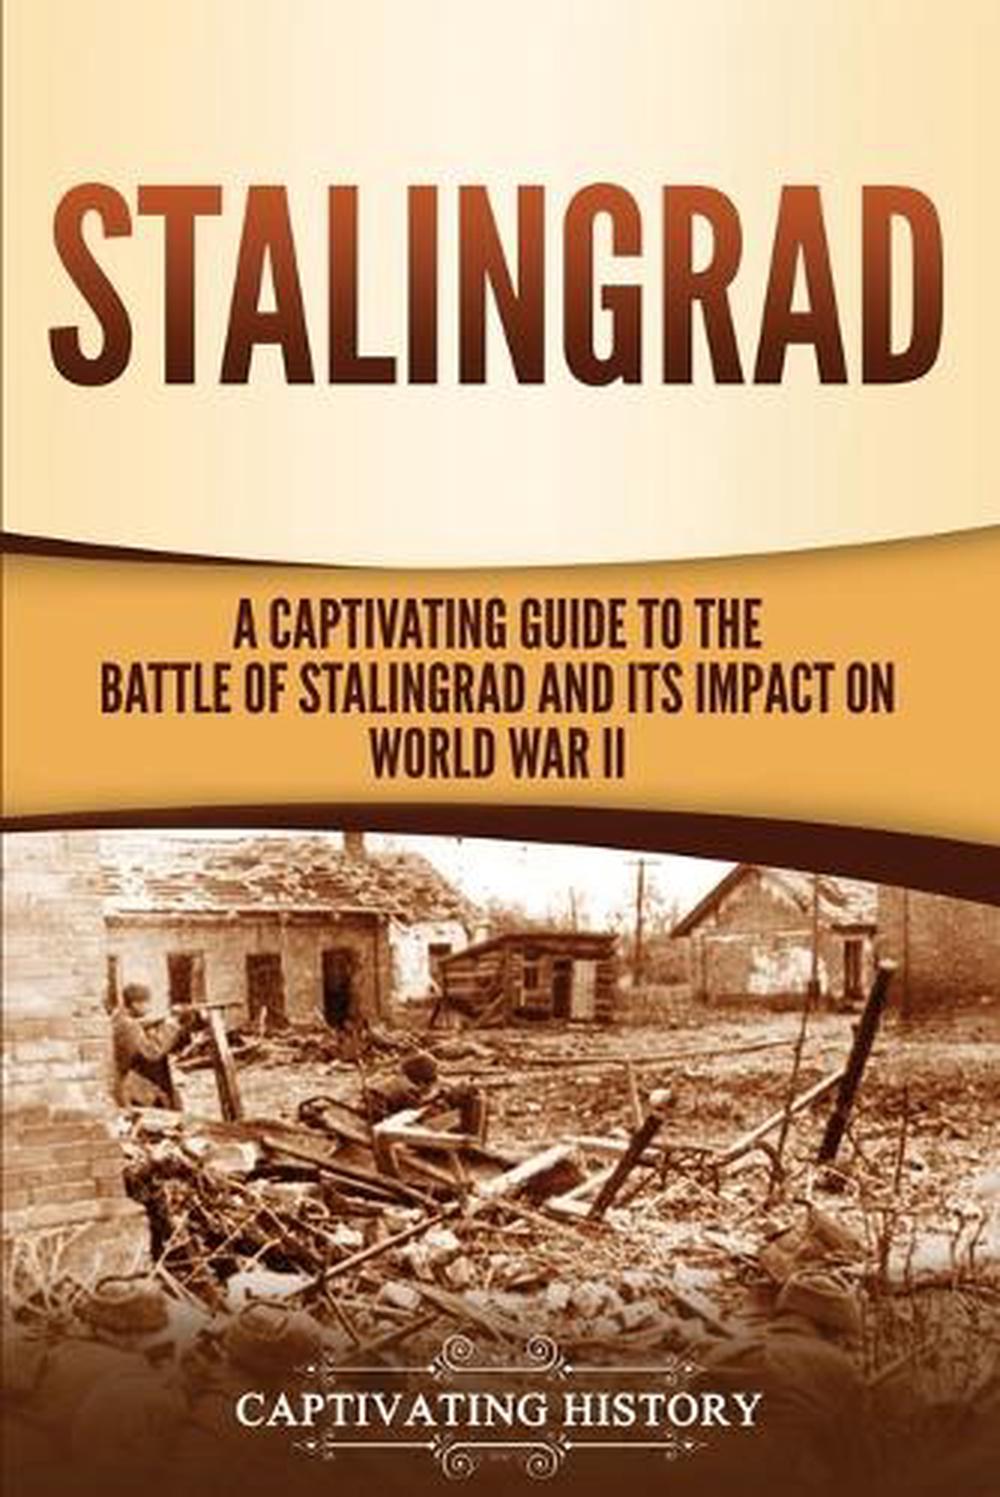 Stalingrad by Captivating History (English) Paperback Book Free ...